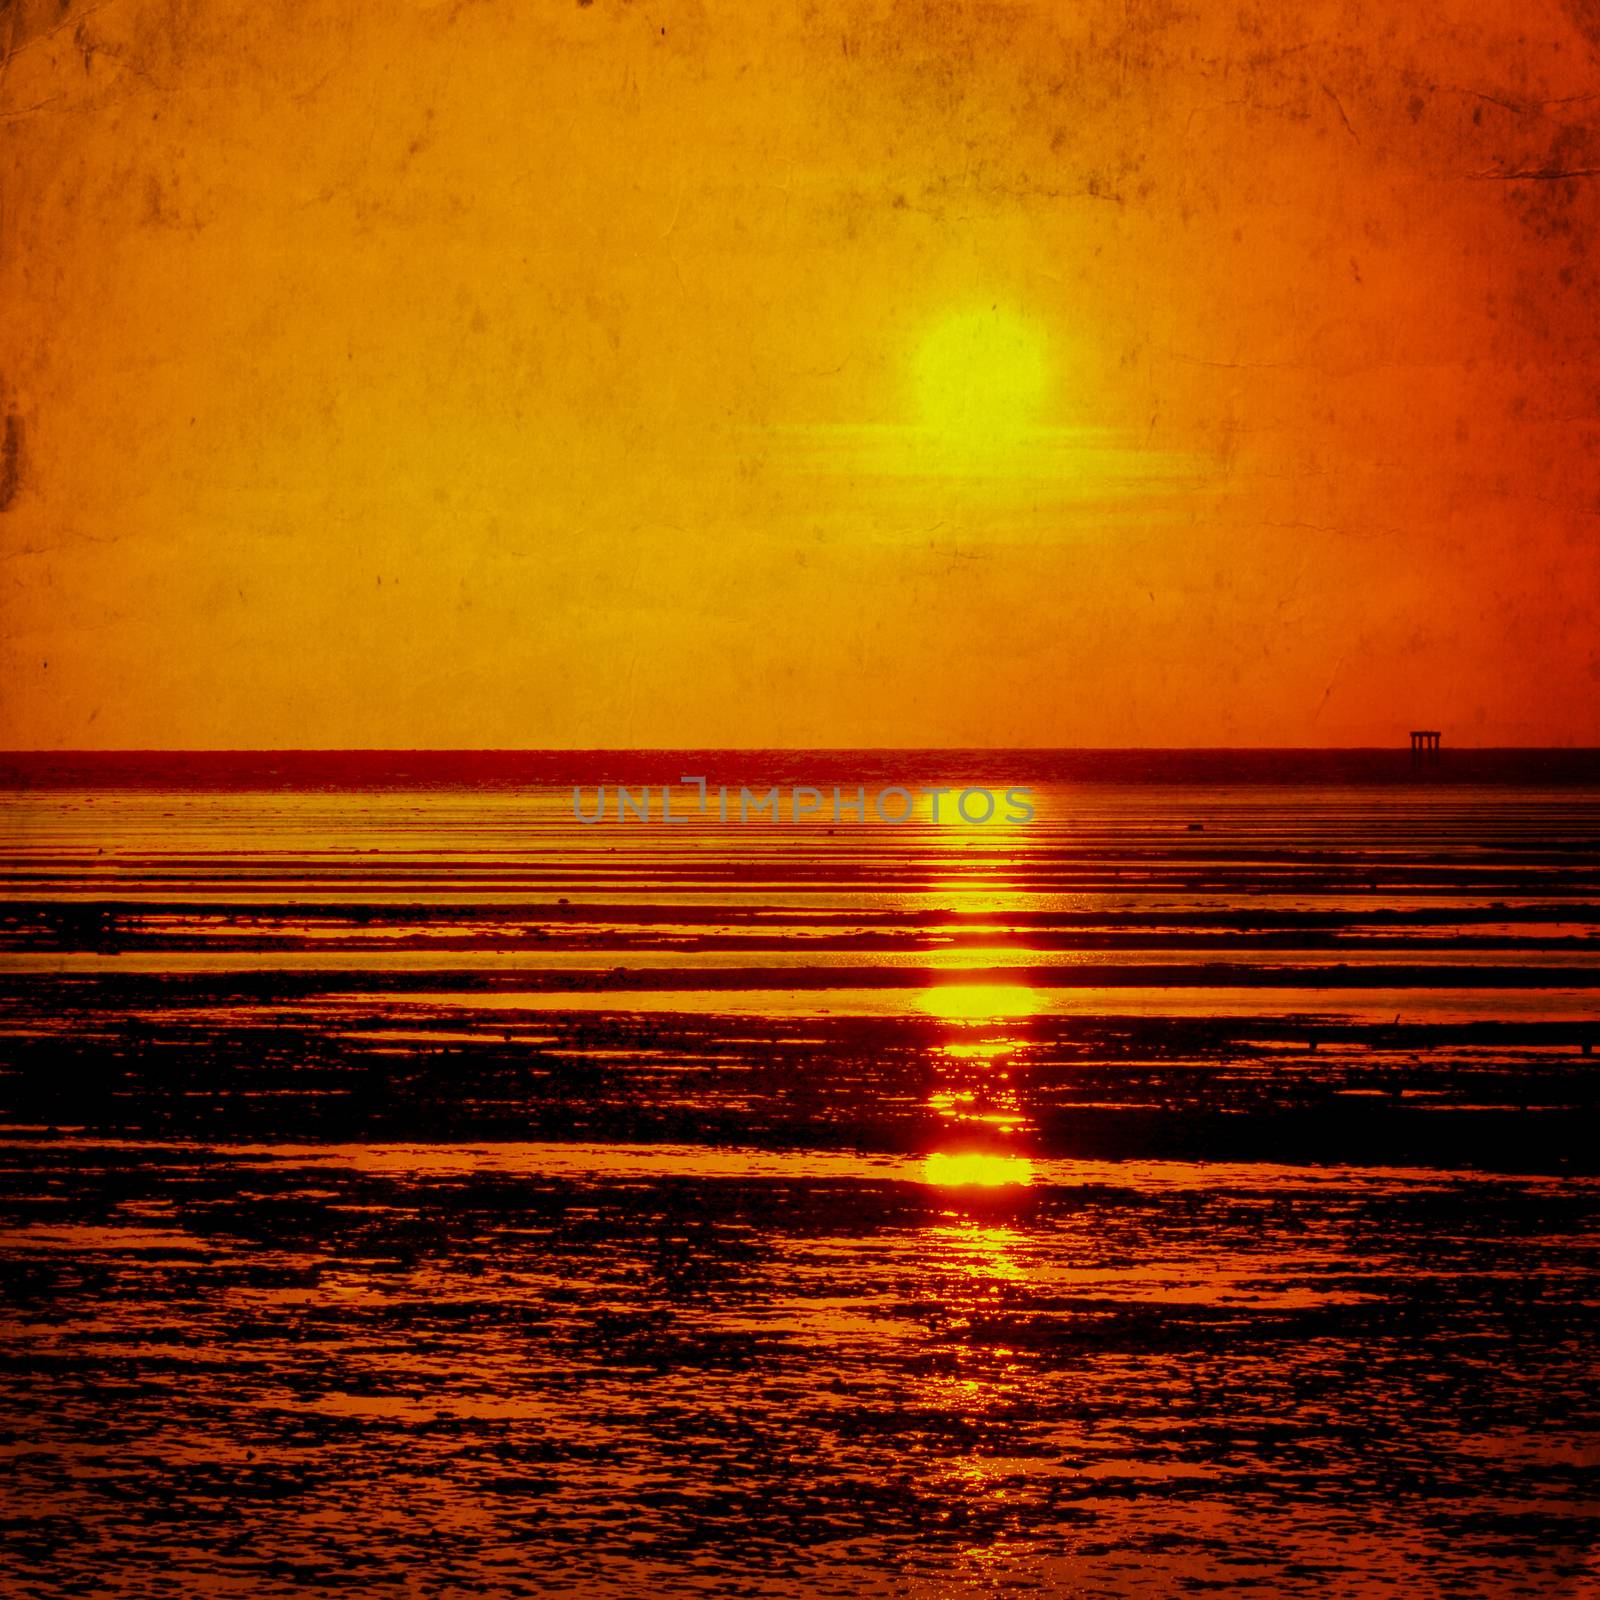 Seascape sunset in grunge  by wyoosumran